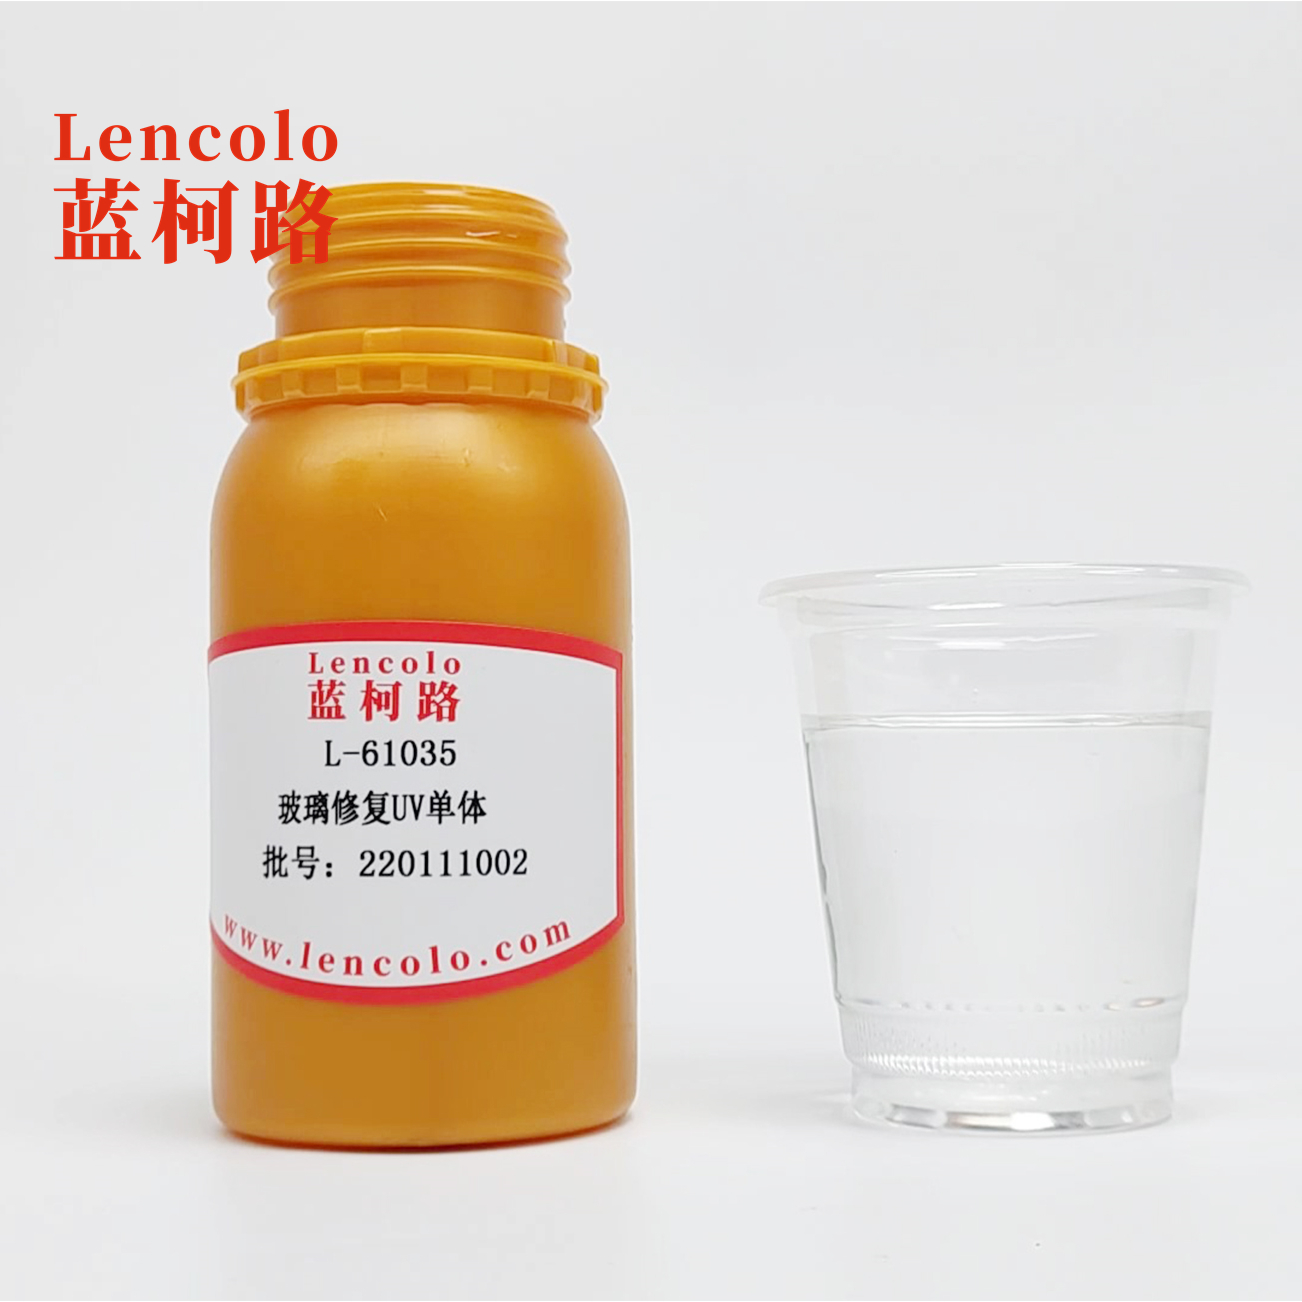 L-61036(LMA) Lauryl Methacrylate CAS#142-90-5 synthetic resins UV monomer with good flexibility